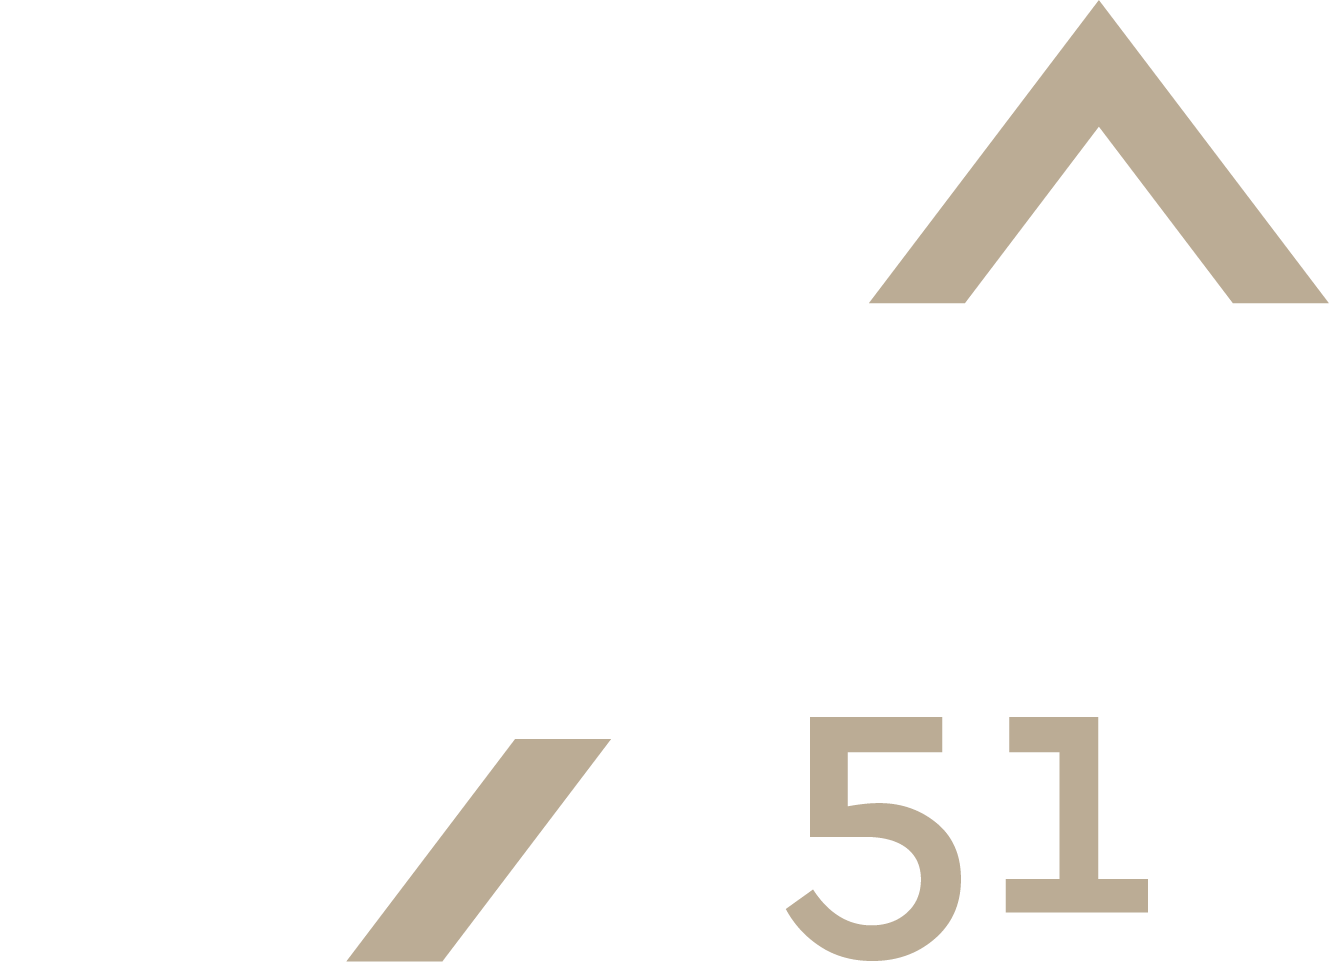 Building 51